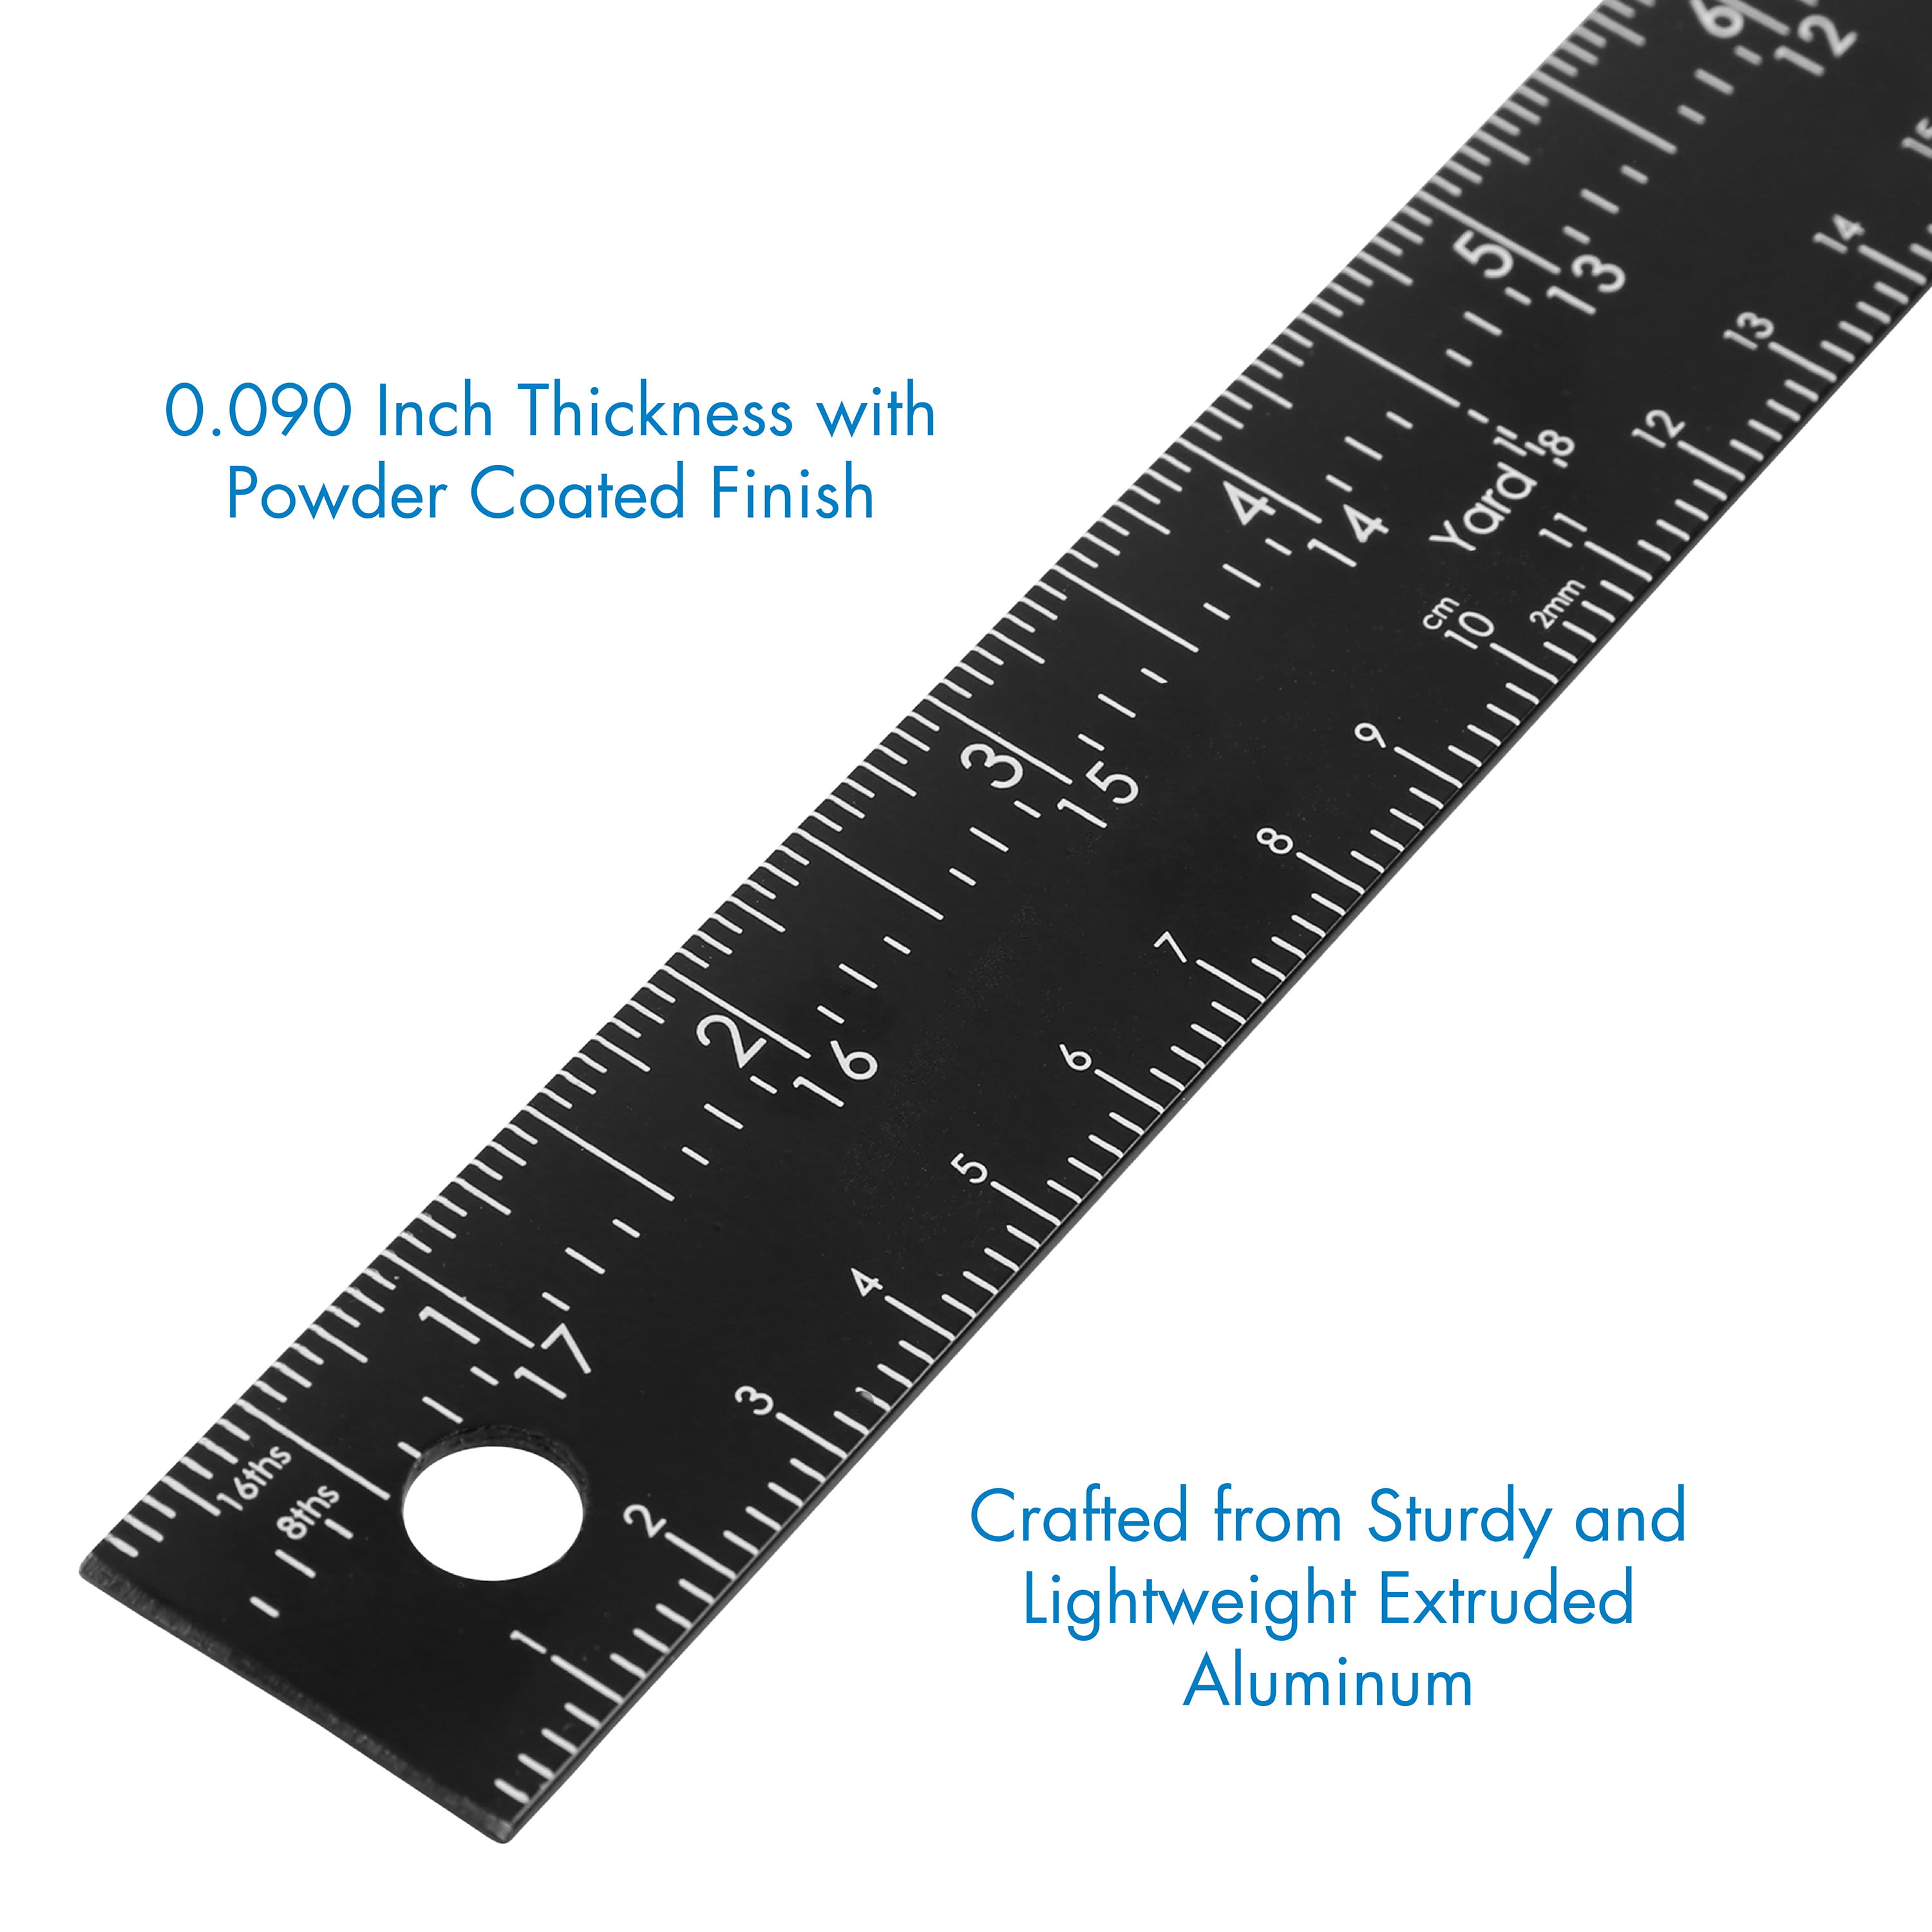 Alumicolor Aluminum Yardstick Ruler 36 in